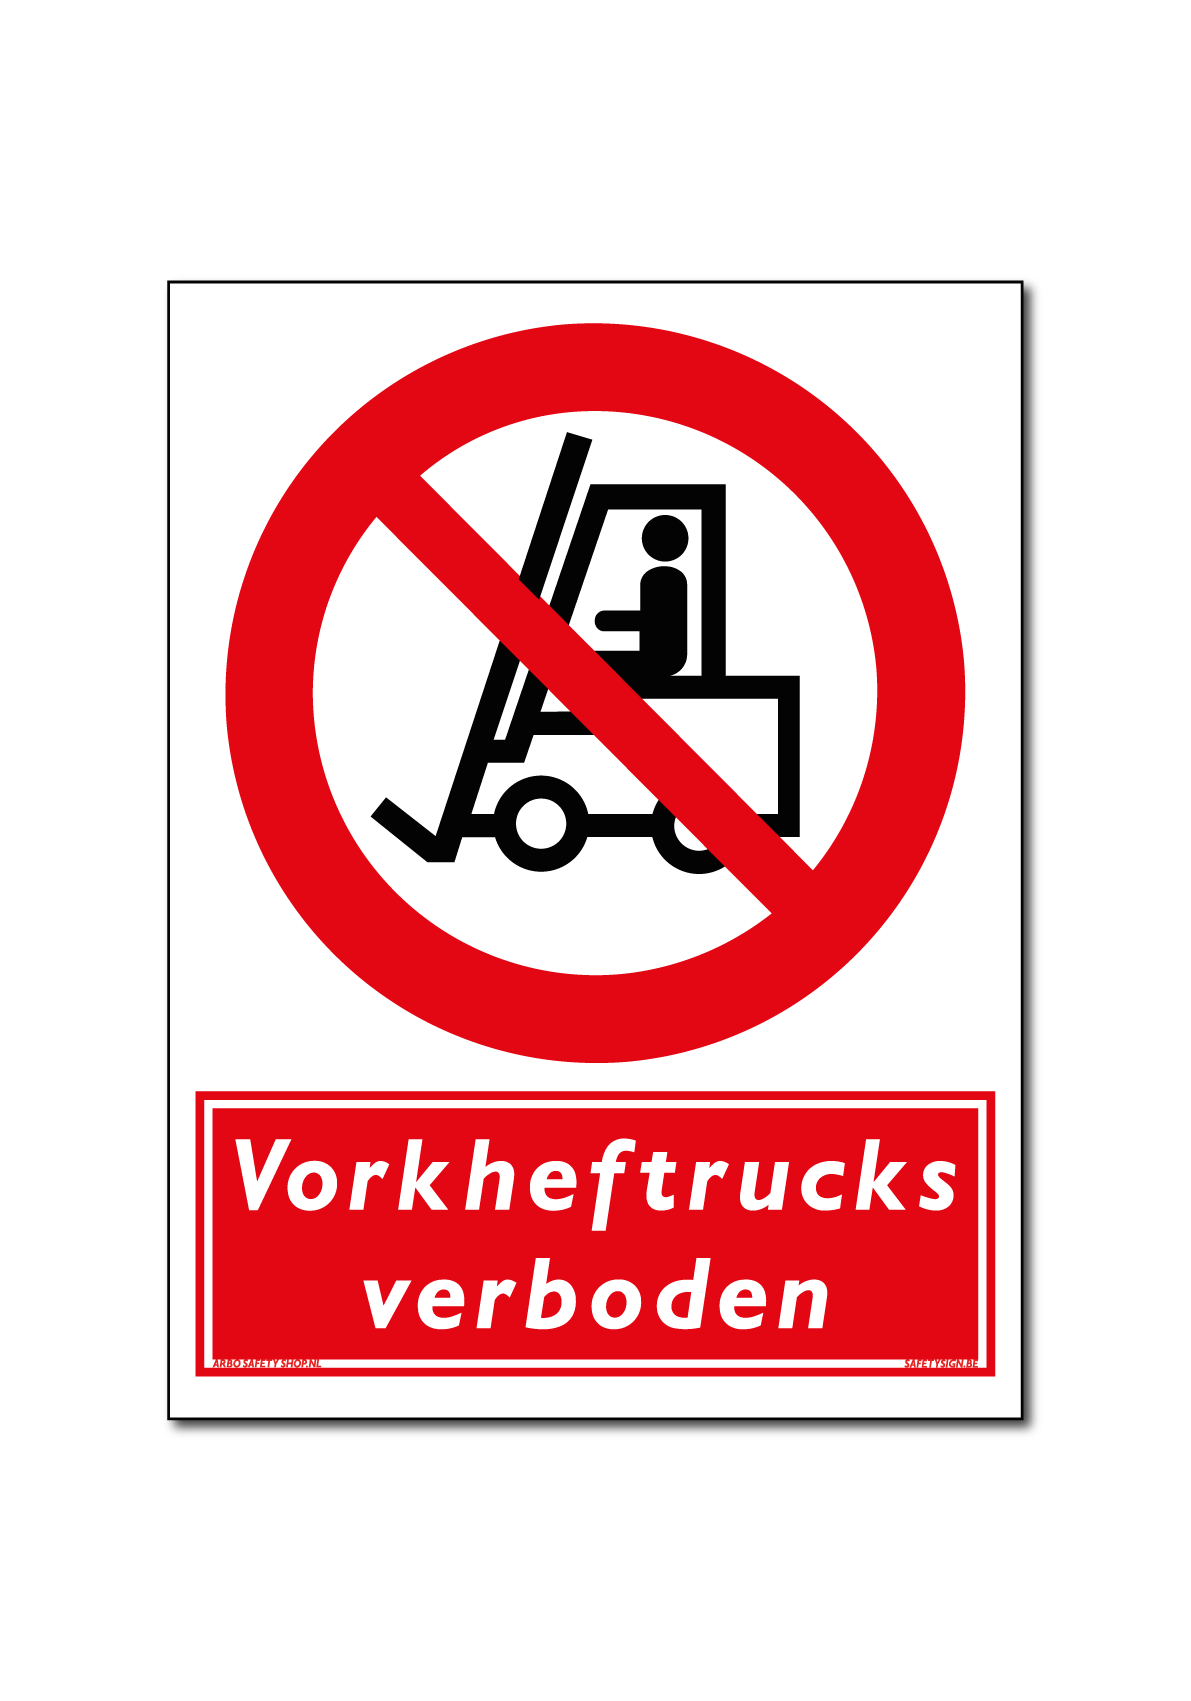 Verbod Vorkheftrucks verboden (DRO08)